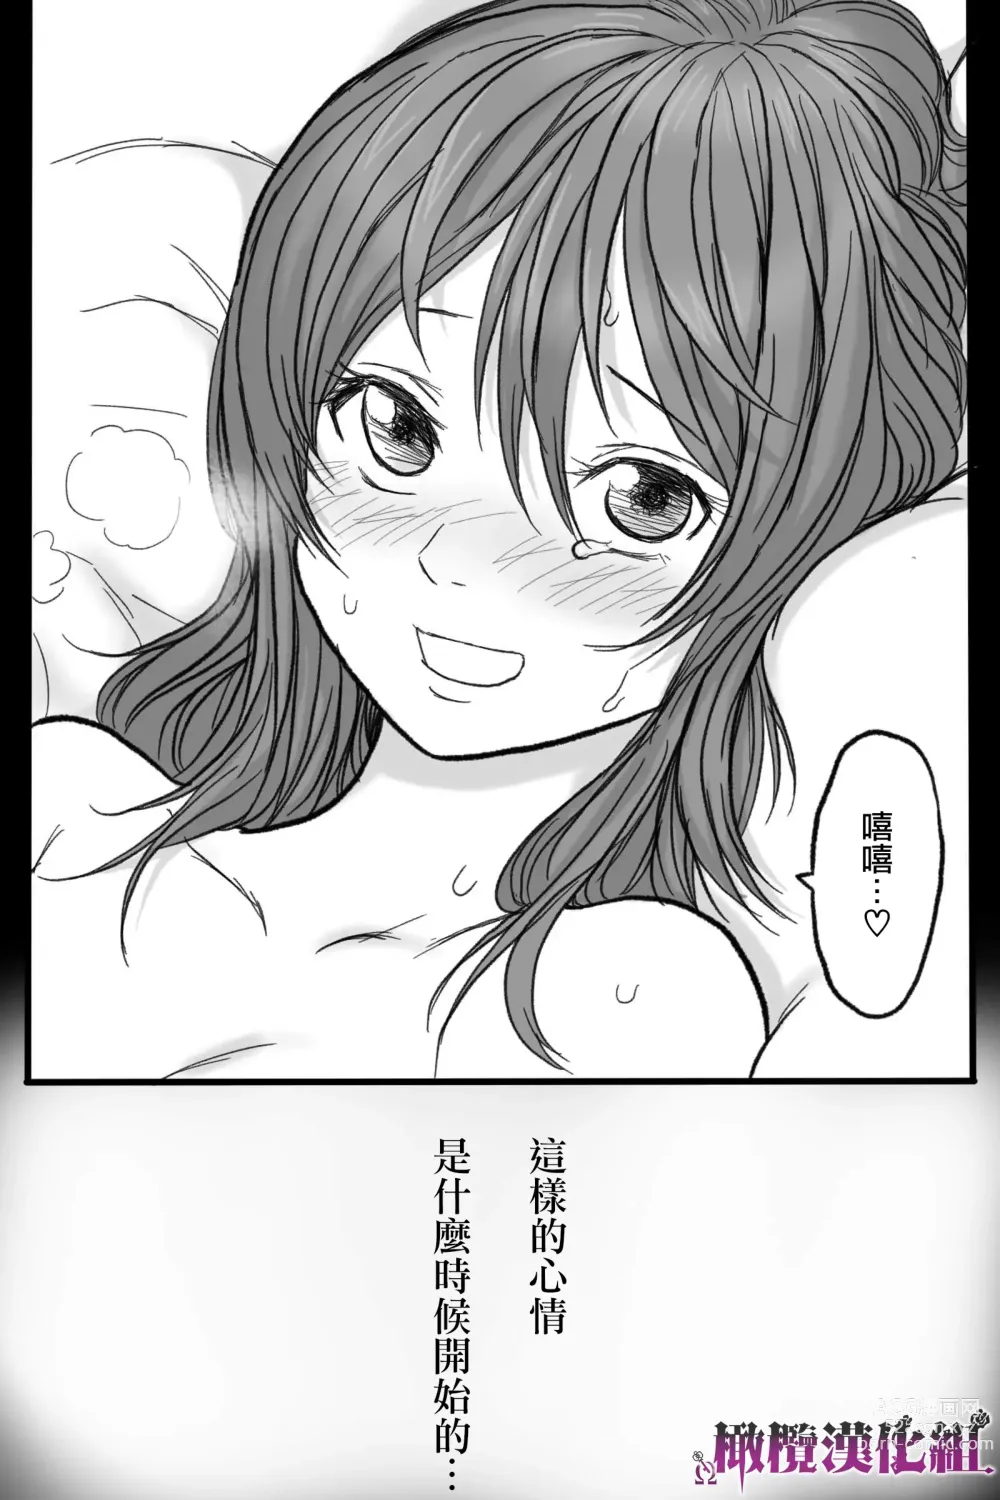 Page 73 of doujinshi 牢狱情人〜军队护士与兽人的禁断同人本本〜